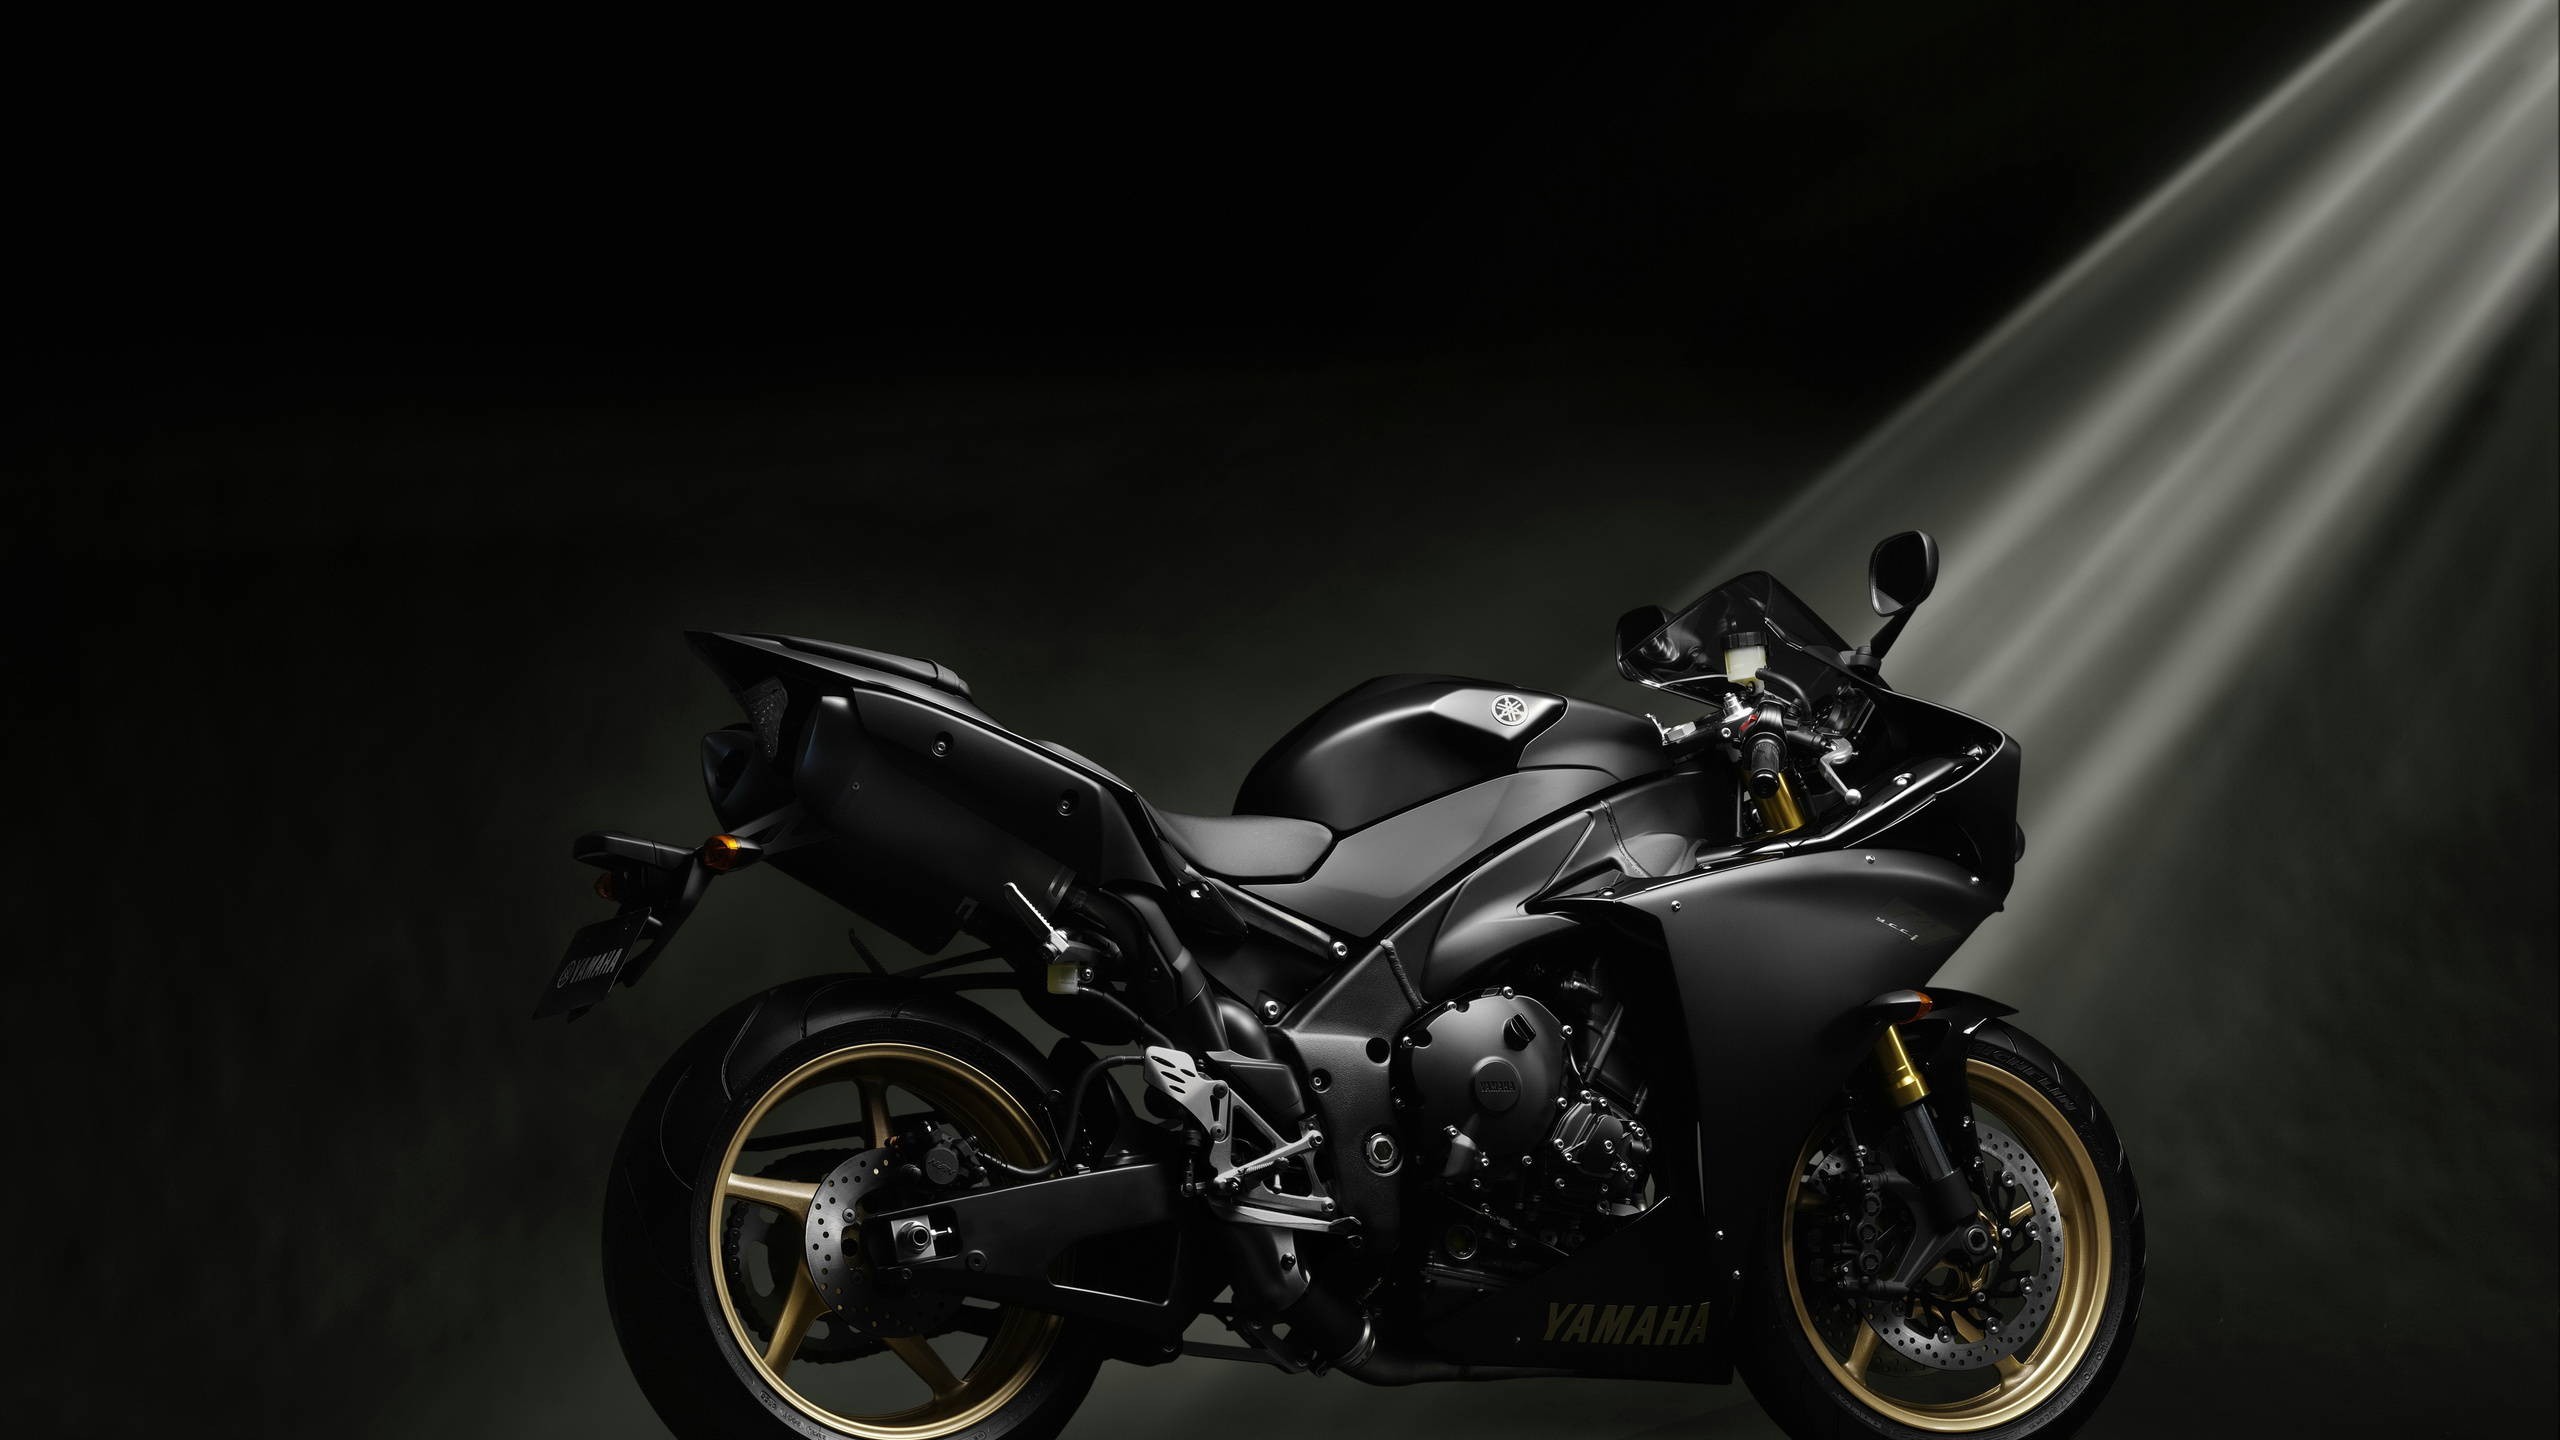 General 2560x1440 Yamaha Yamaha YZF motorcycle vehicle black motorcycles Japanese motorcycles